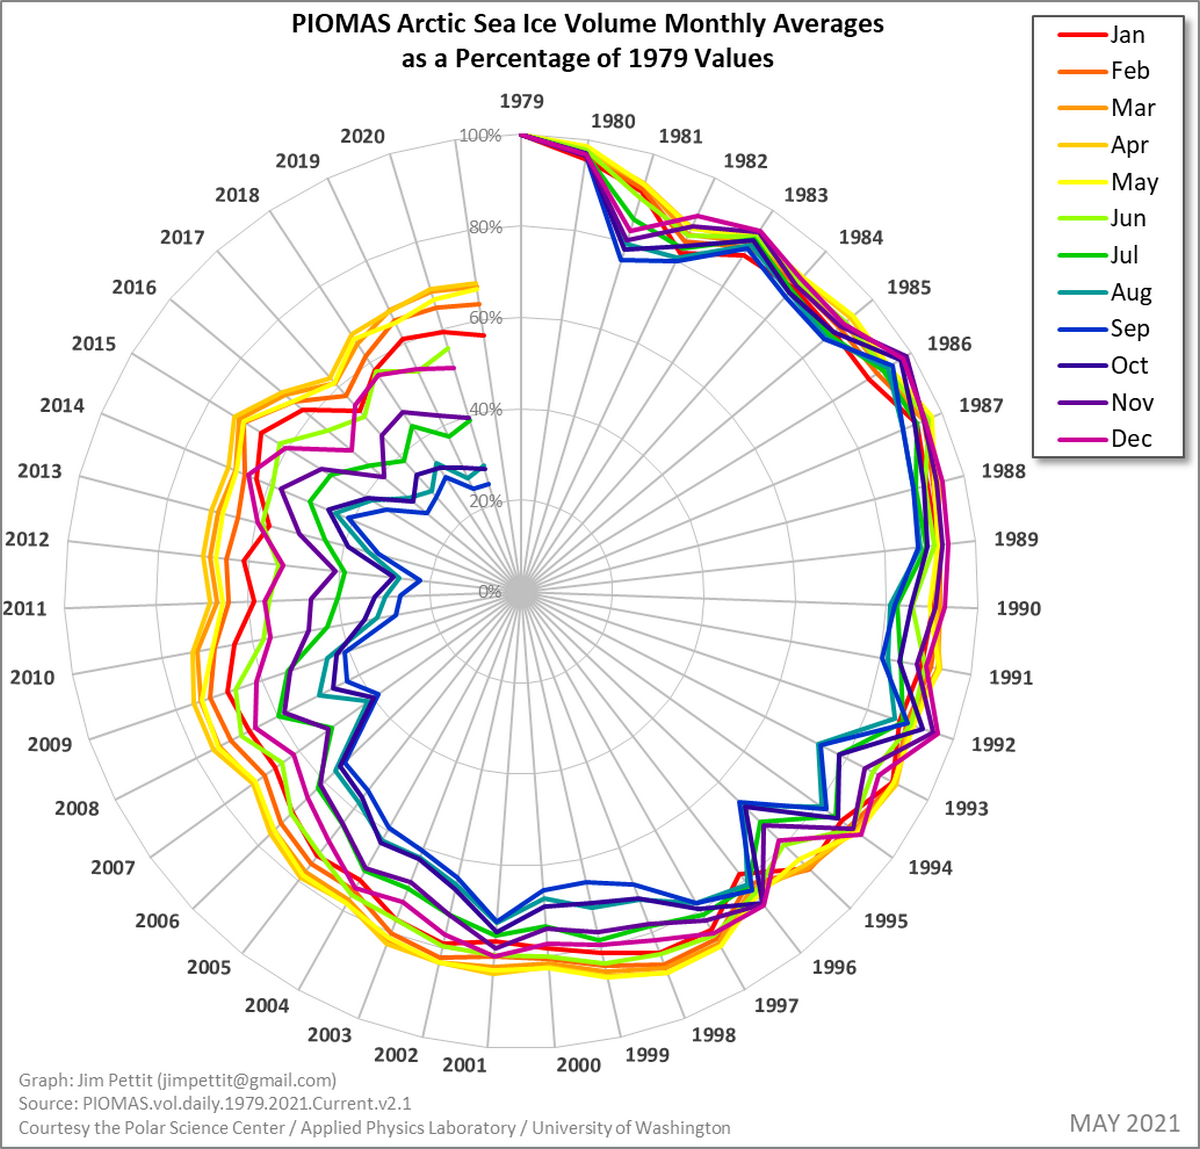 PIOMAS Arctic Sea Ice Volume Monthly Averages as a Percentage of 1979 Values - Polar Plot